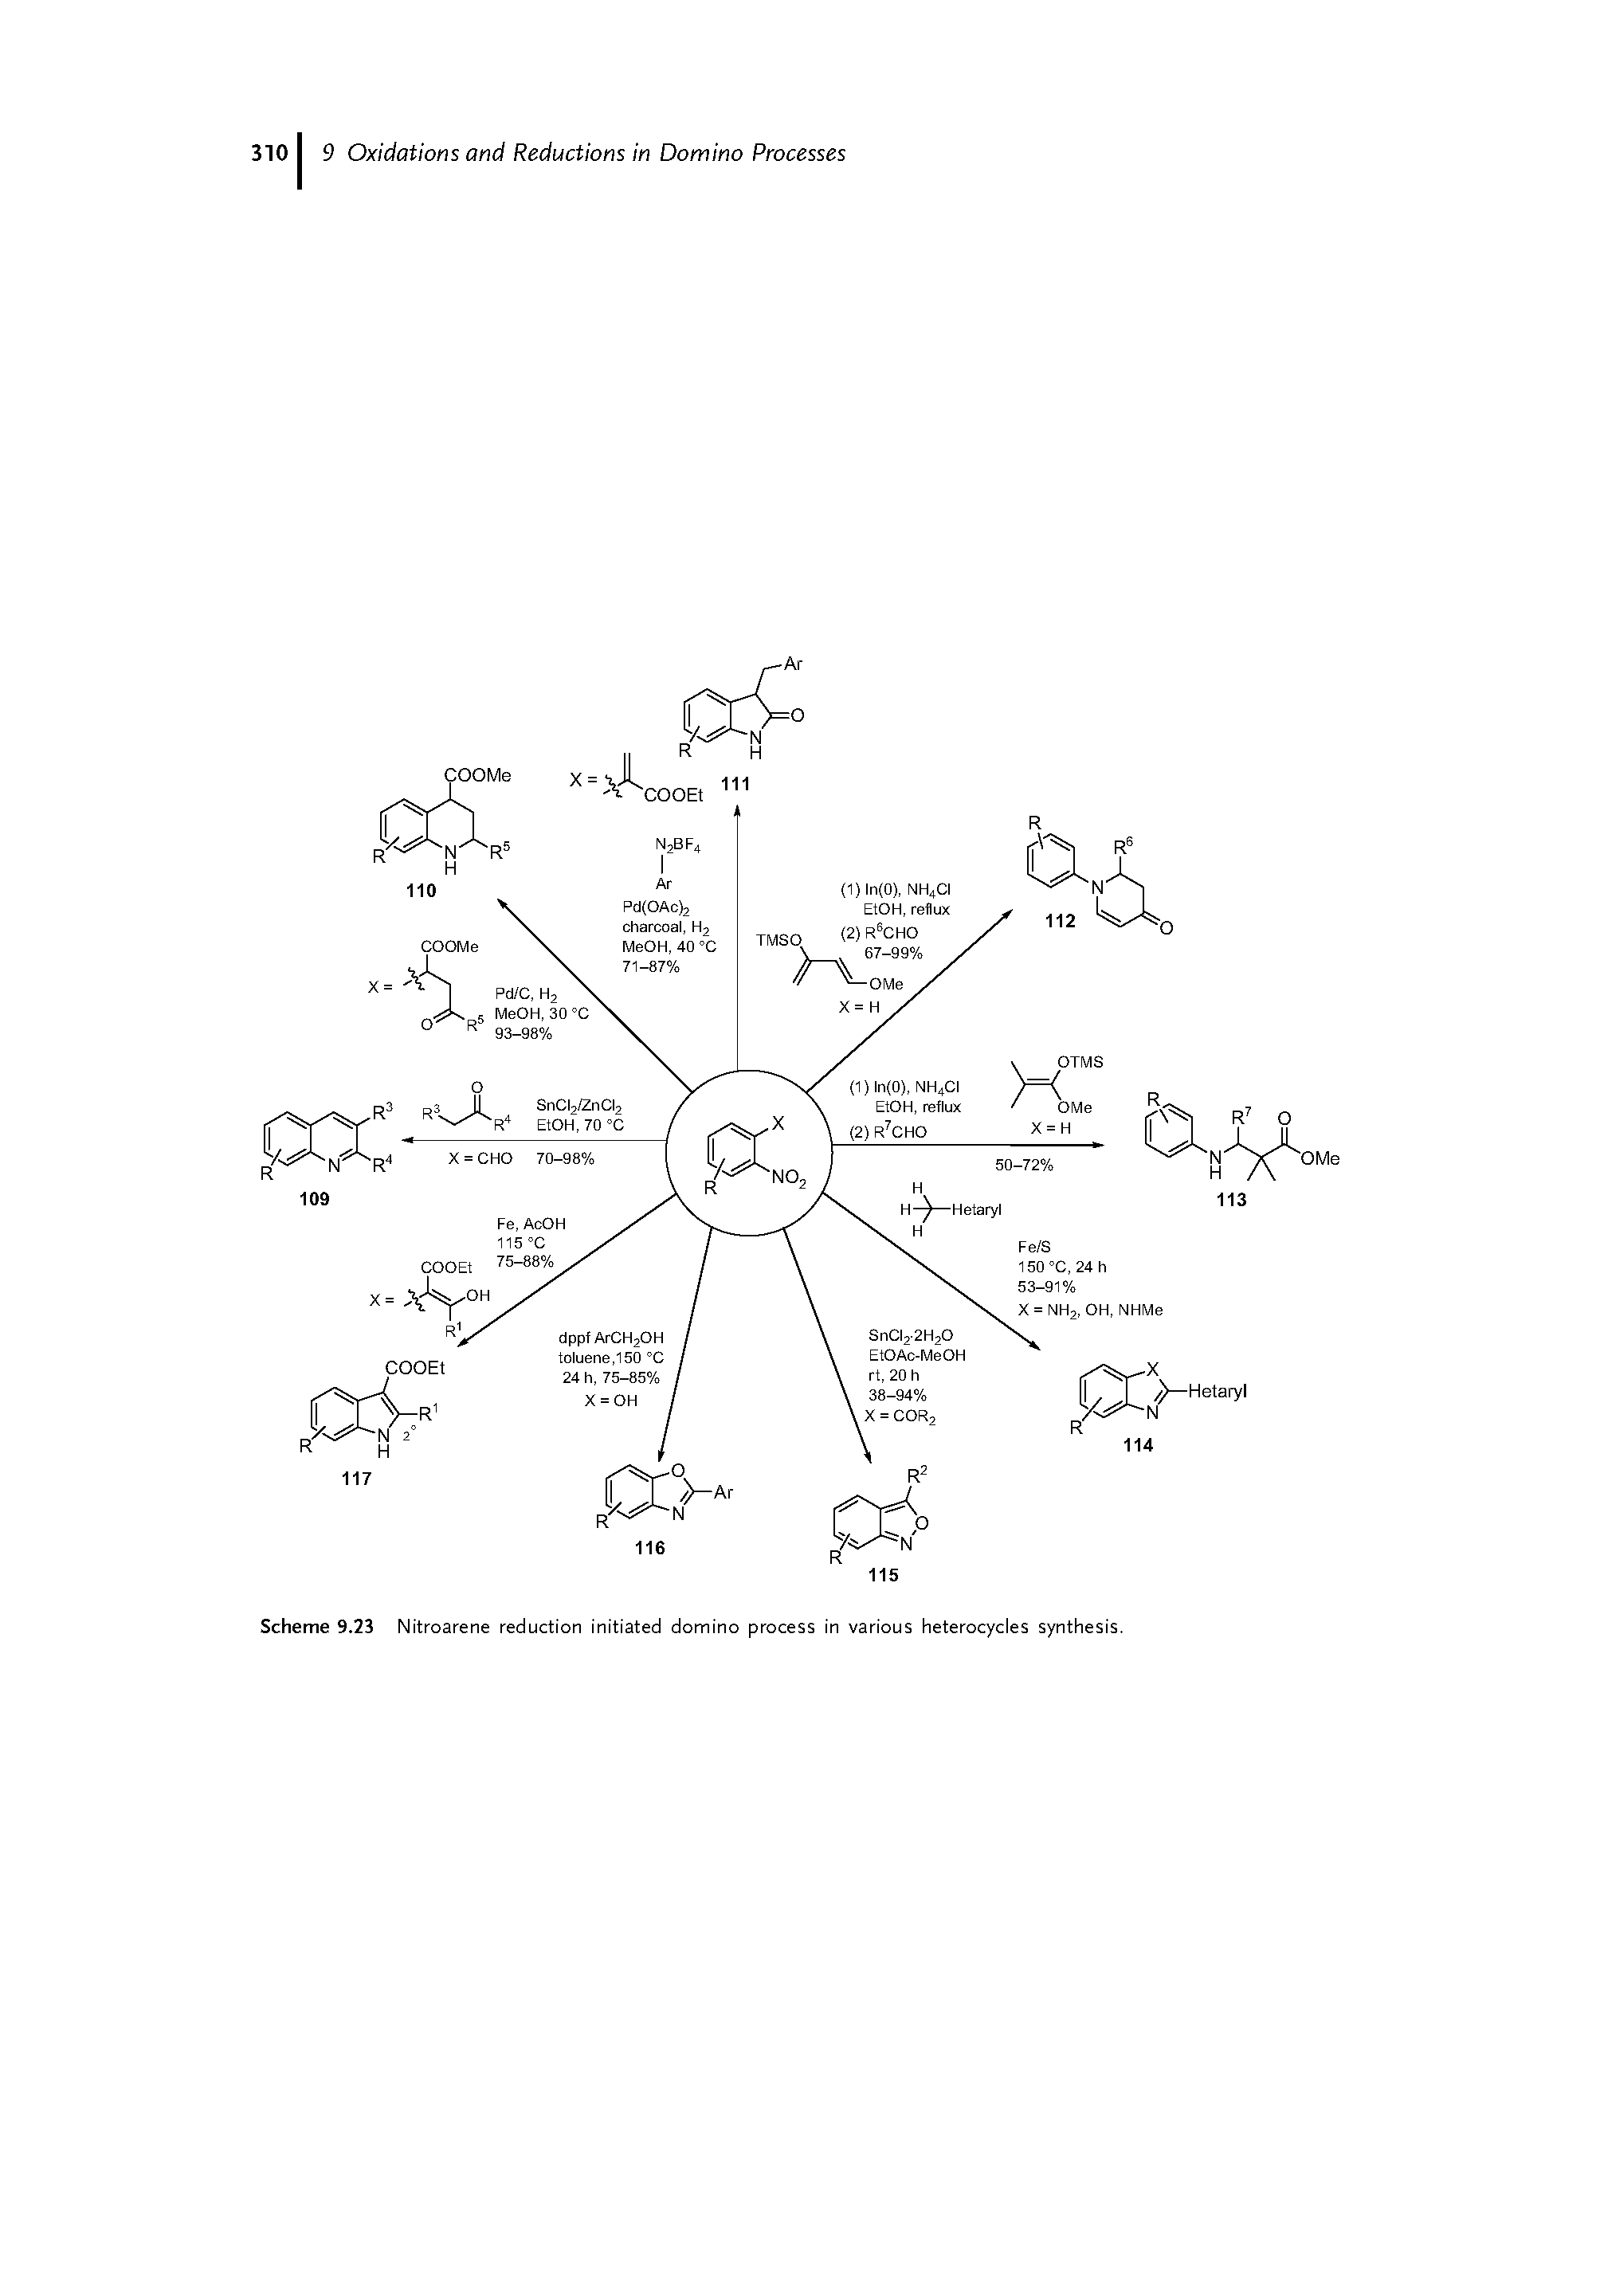 Scheme 9.23 Nitroarene reduction initiated domino process in various heterocycles synthesis.